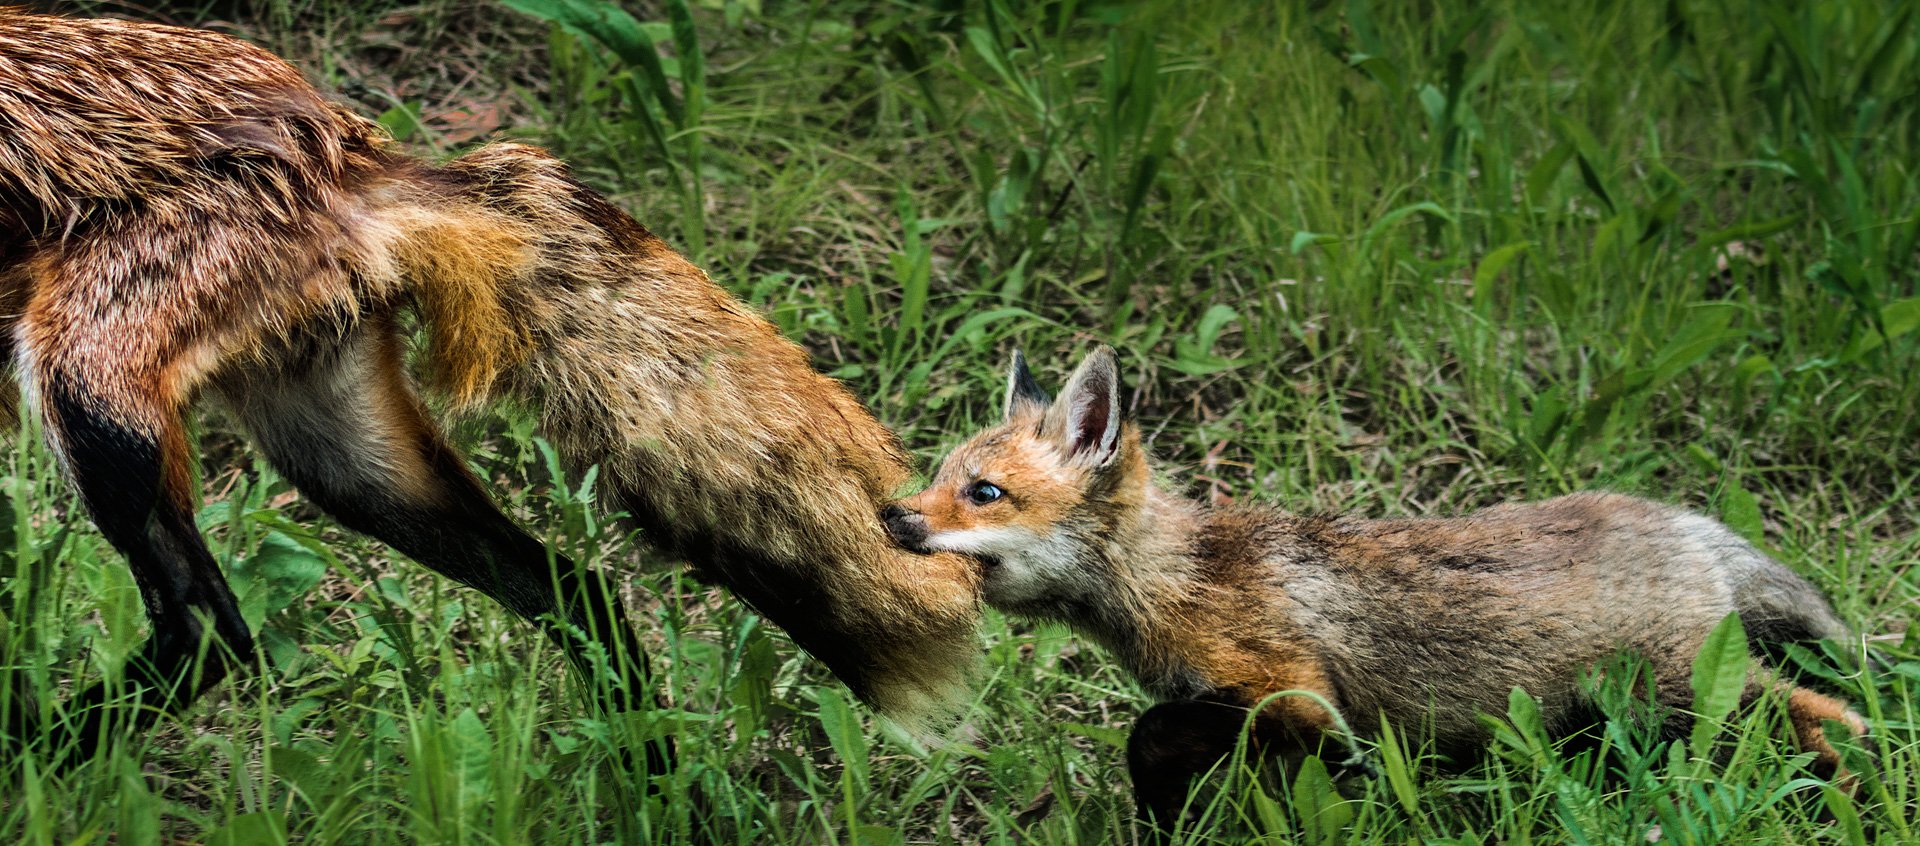 RU - The Fox's Tail